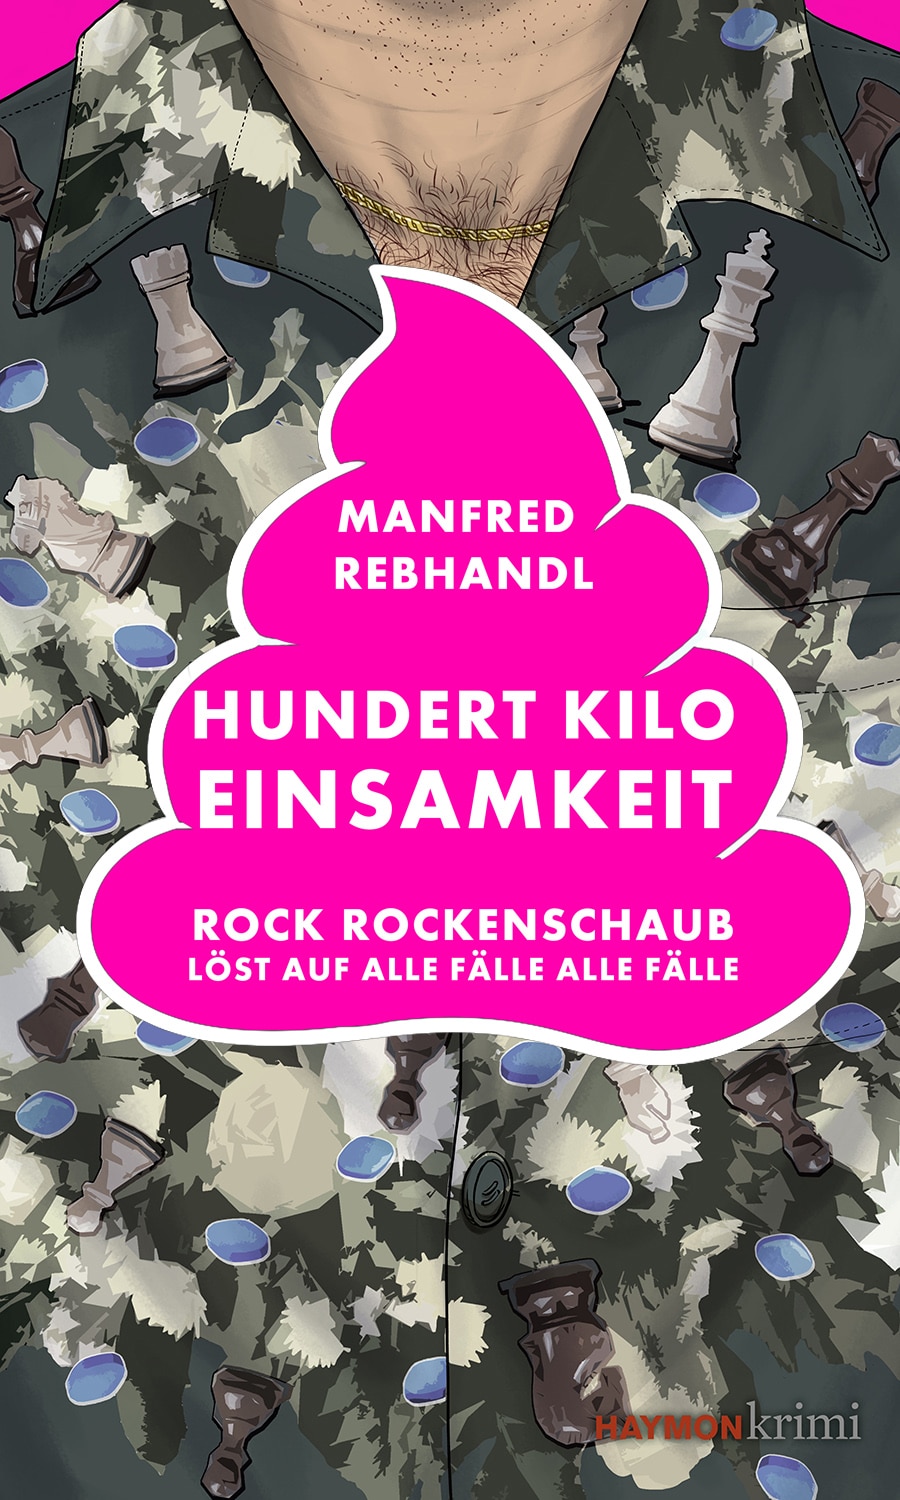 REBHANDL Manfred: Hundert Kilo Einsamkeit